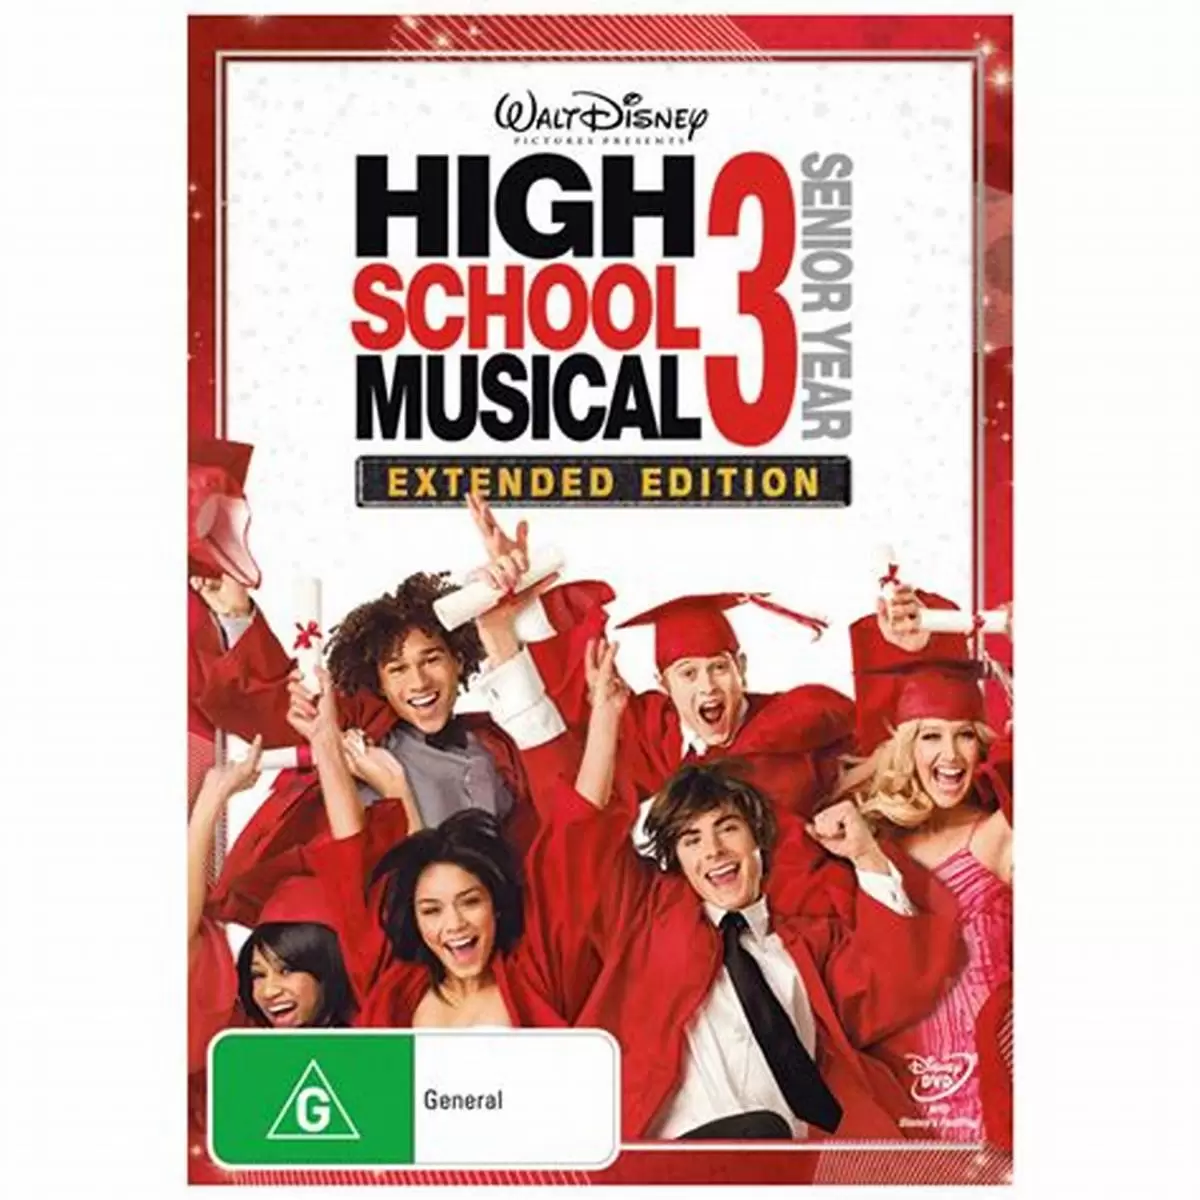 Autres DVD Disney - High school musical 3